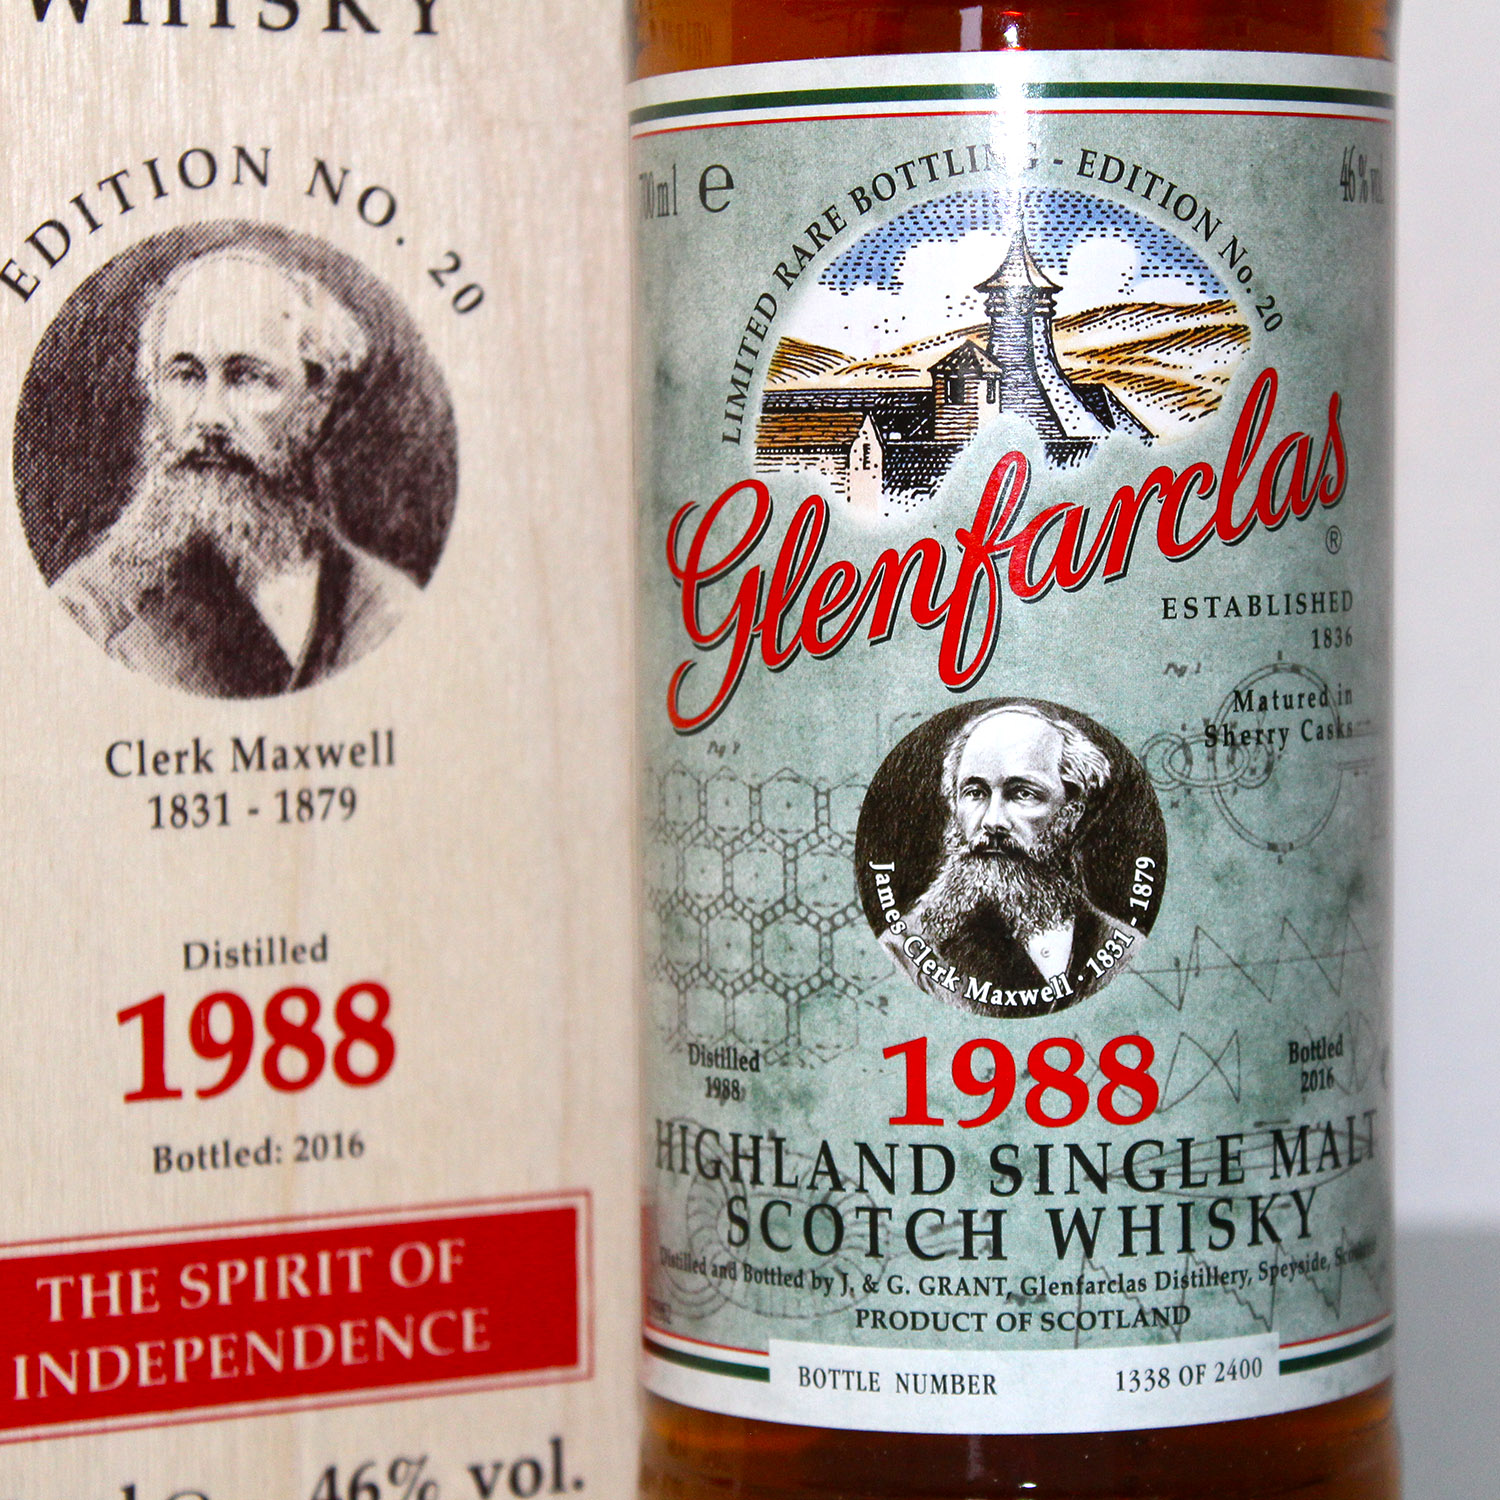 Glenfarclas 1988 Edition No 20 Clerk Maxwell label